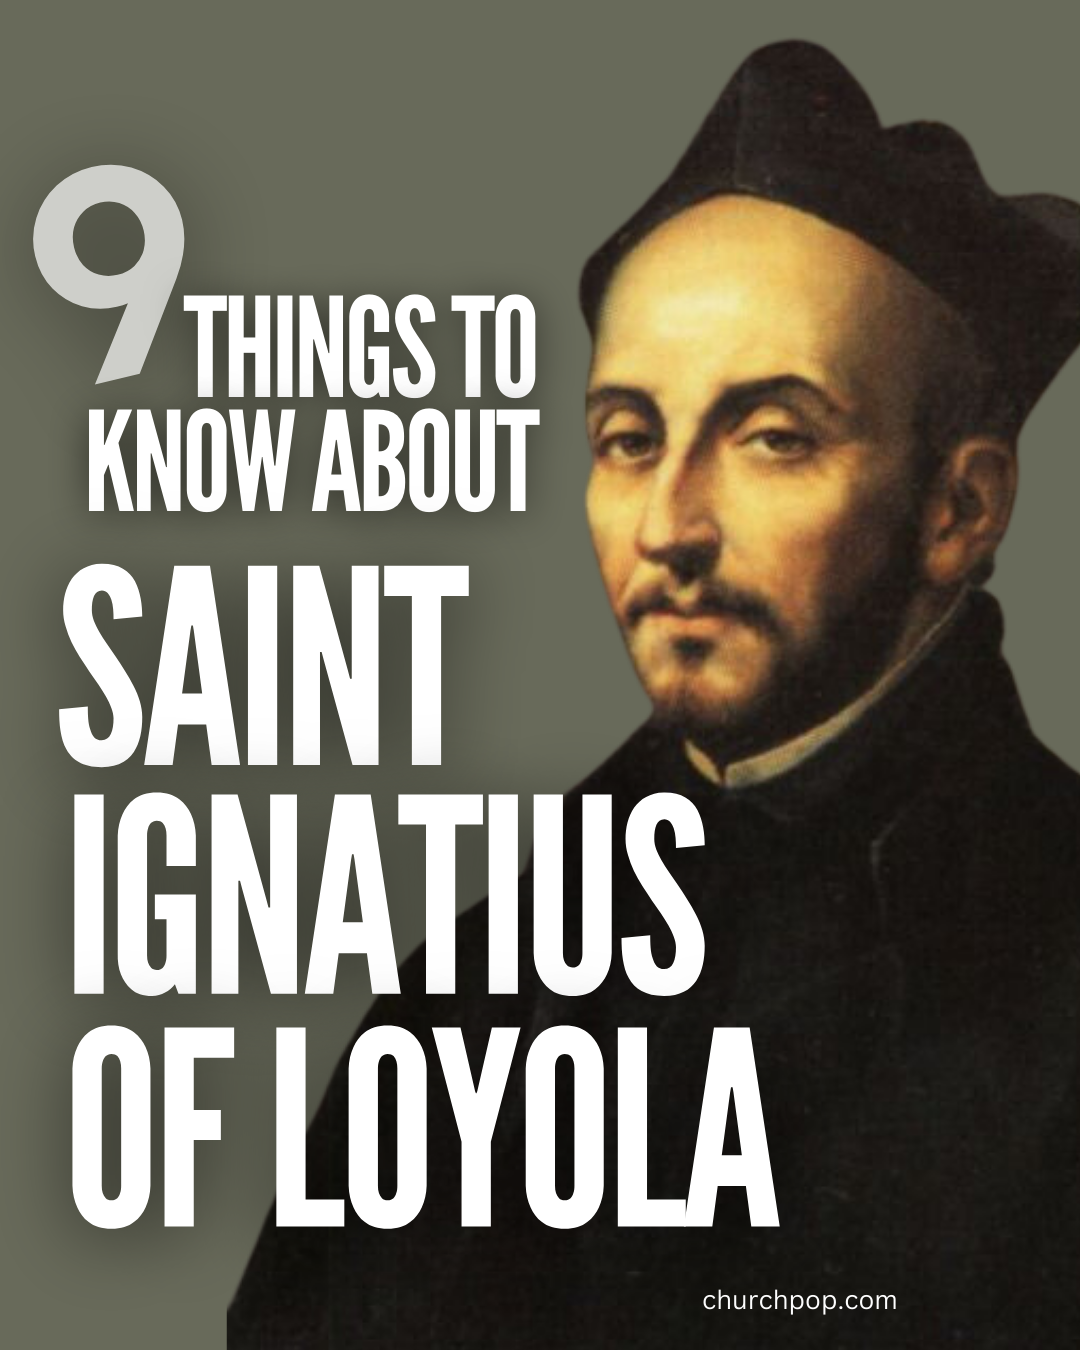 Who is Saint Ignatius of Loyola?